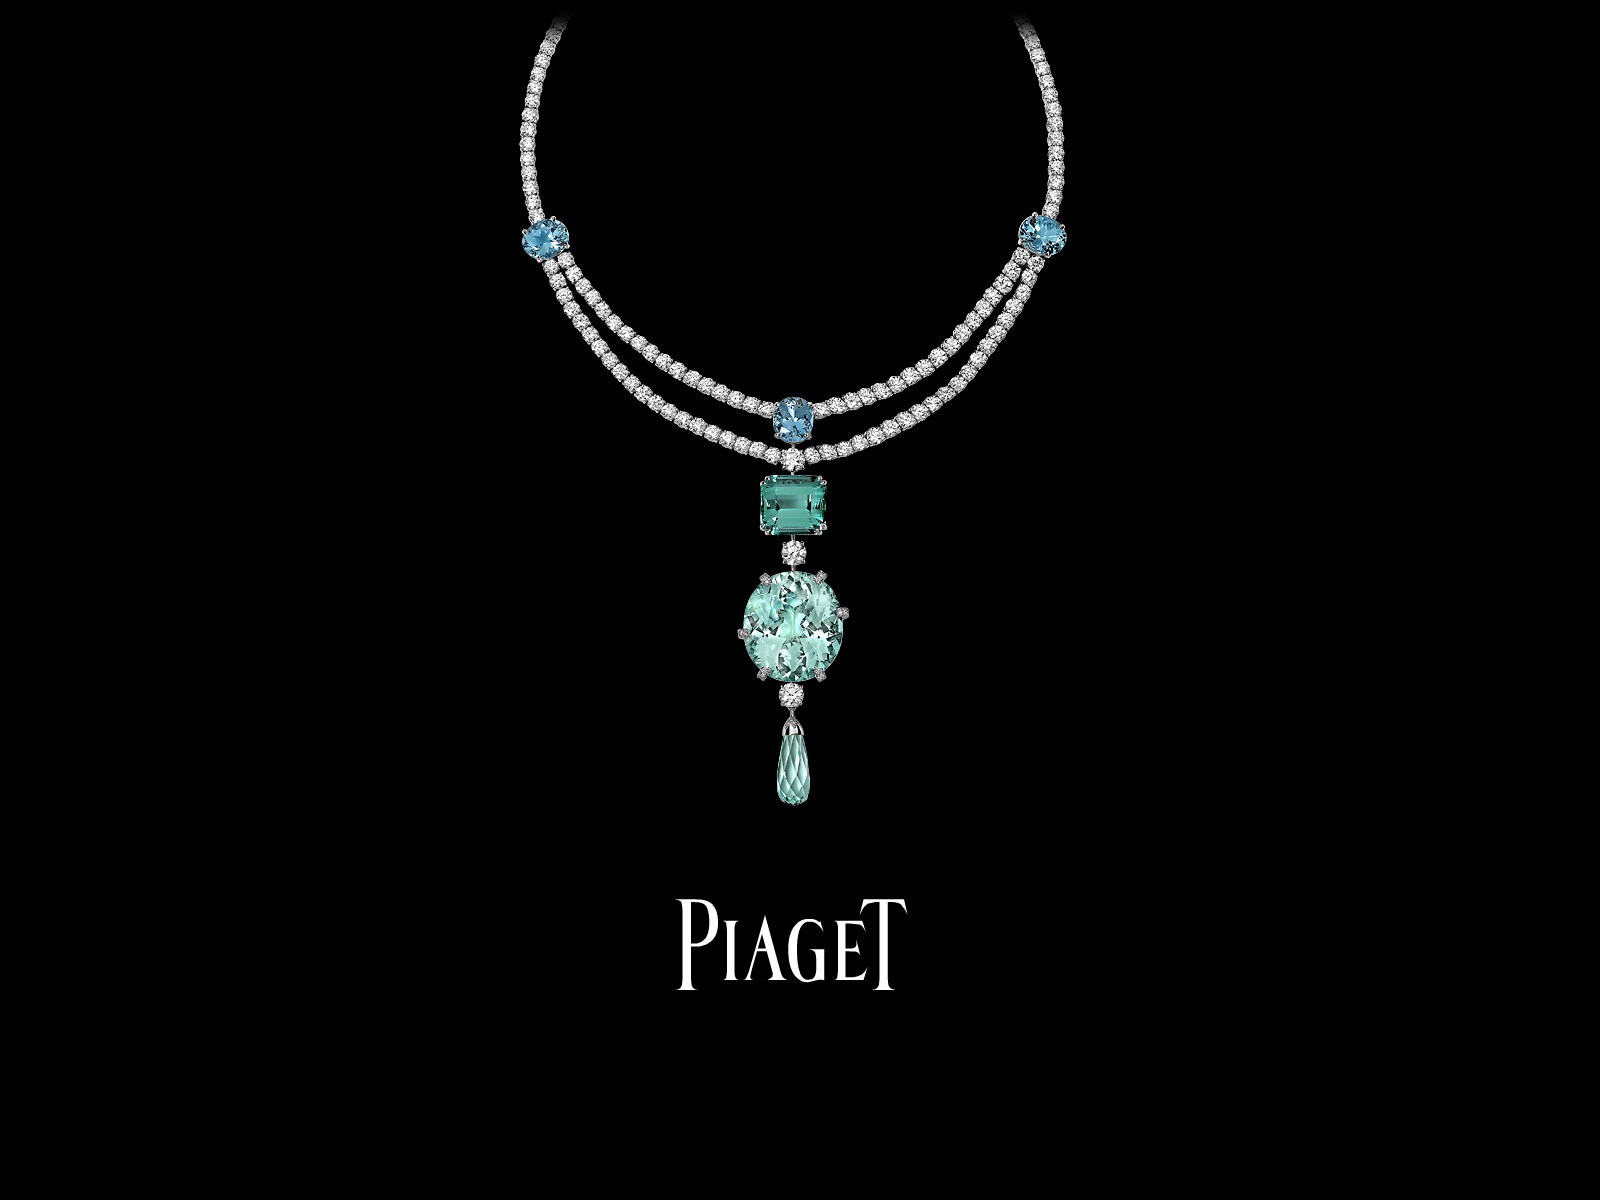 Piaget diamantové šperky tapetu (3) #1 - 1600x1200